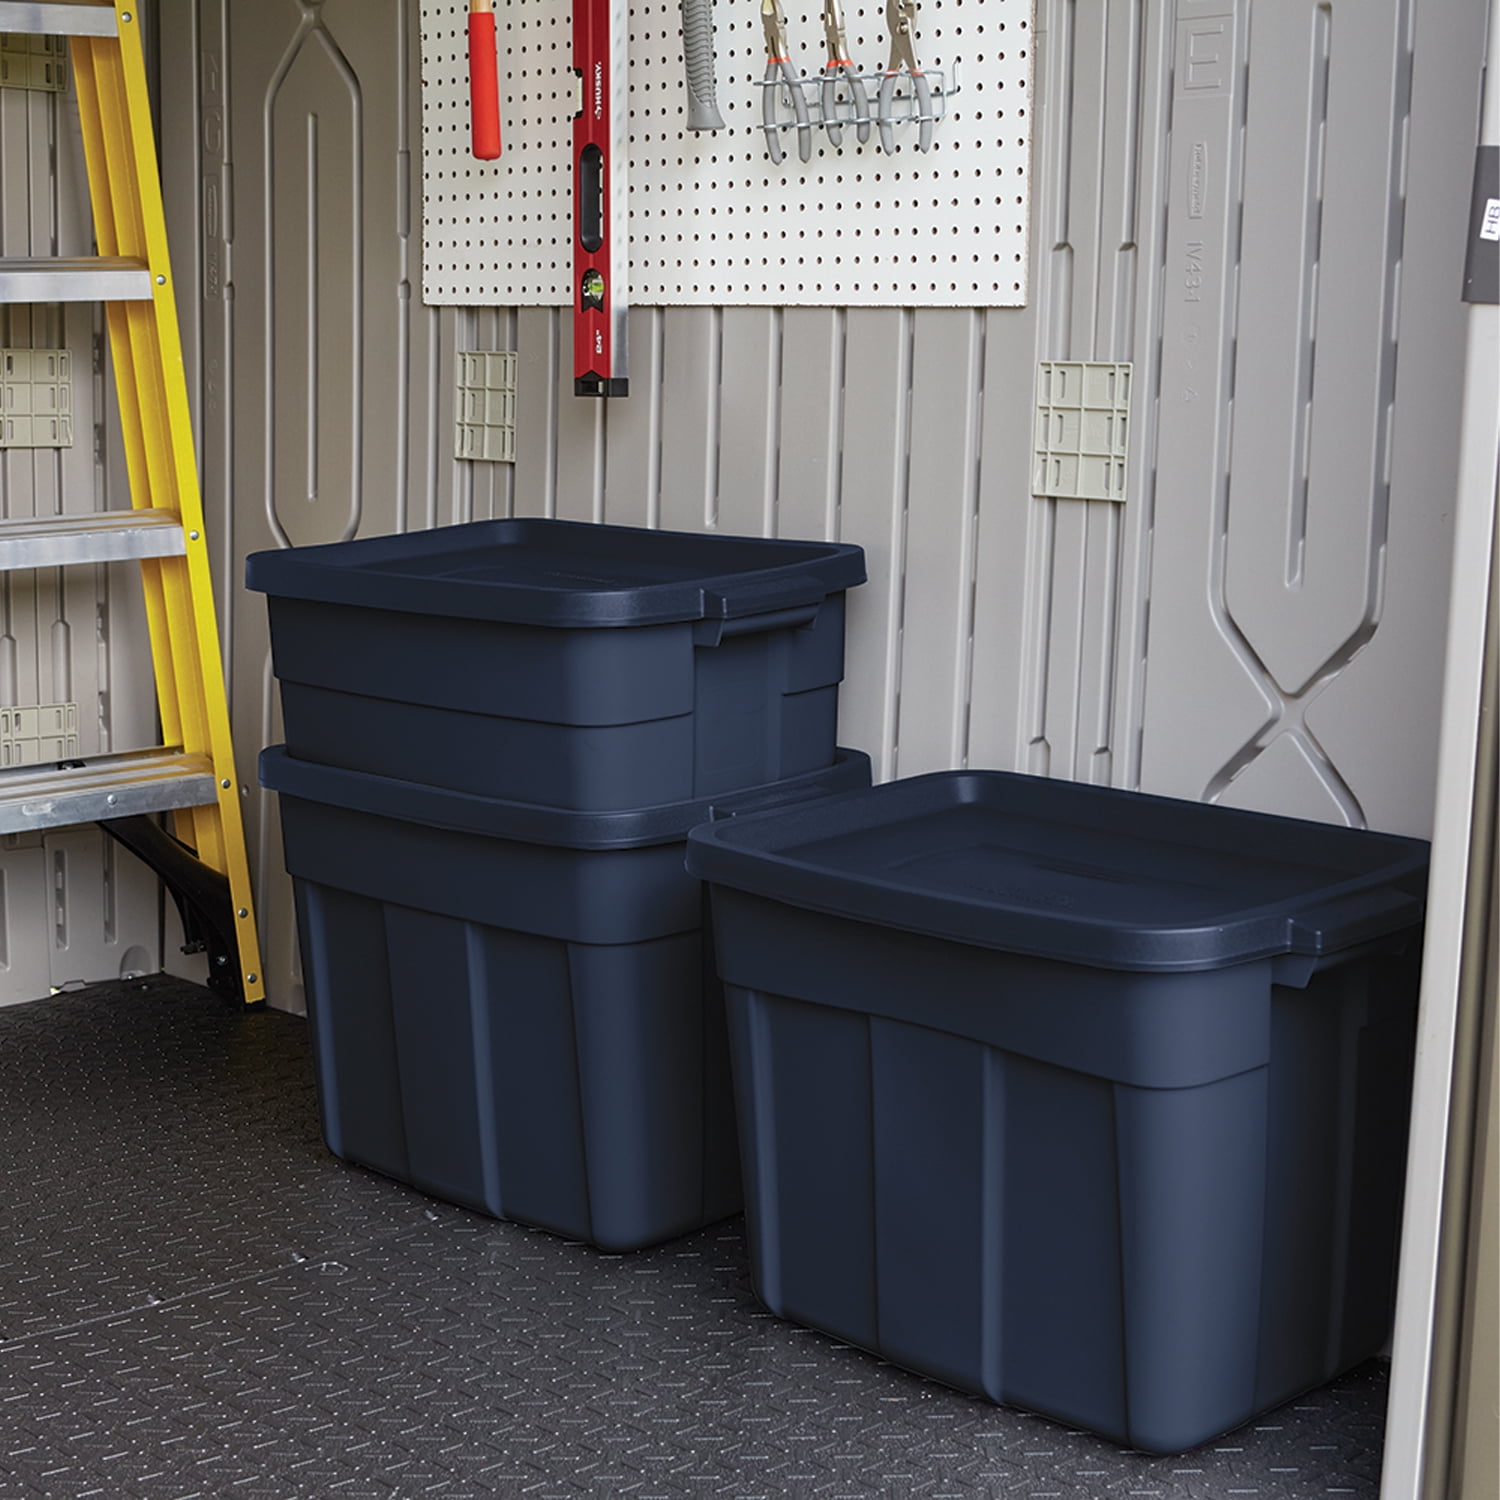 Rubbermaid 3-Gal. Stackable Storage Container, Dark Indigo Metallic (12  Pack) 2 x RMRT030016-6pack - The Home Depot